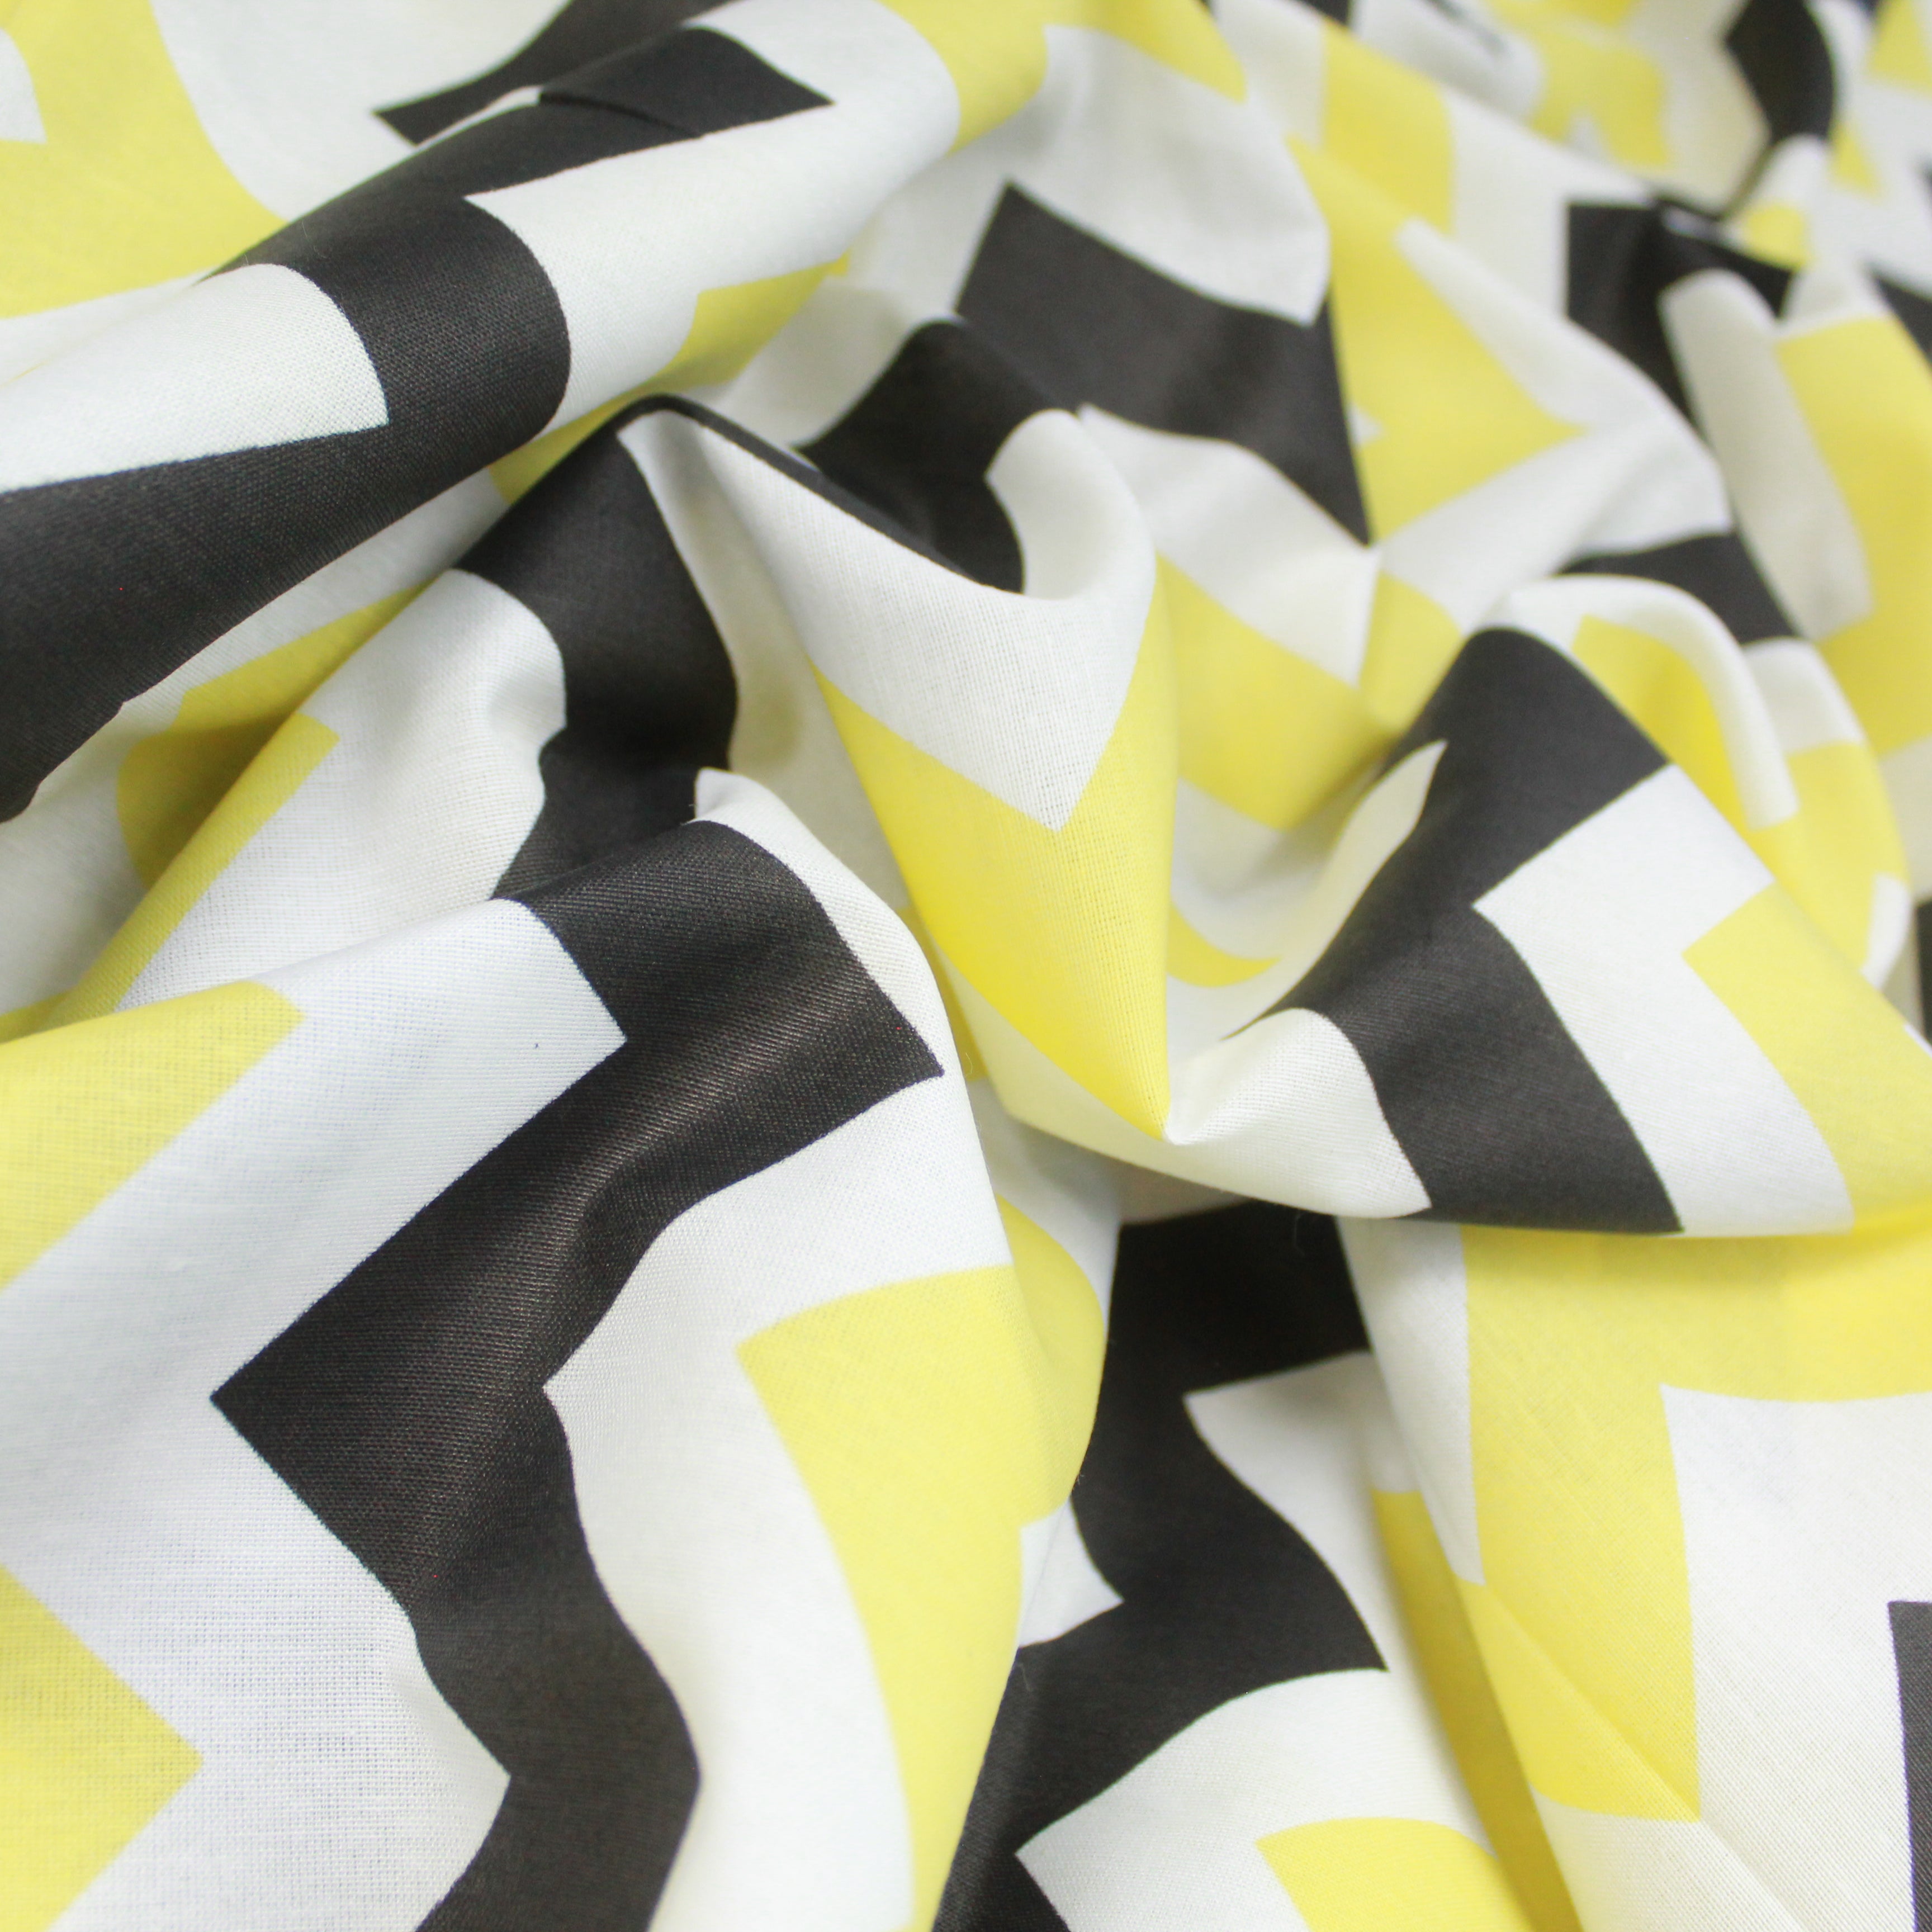 Premium Quality Super Wide Cotton Blend Sheeting "Zig Zag Stripes" 94" Wide Black & Yellow